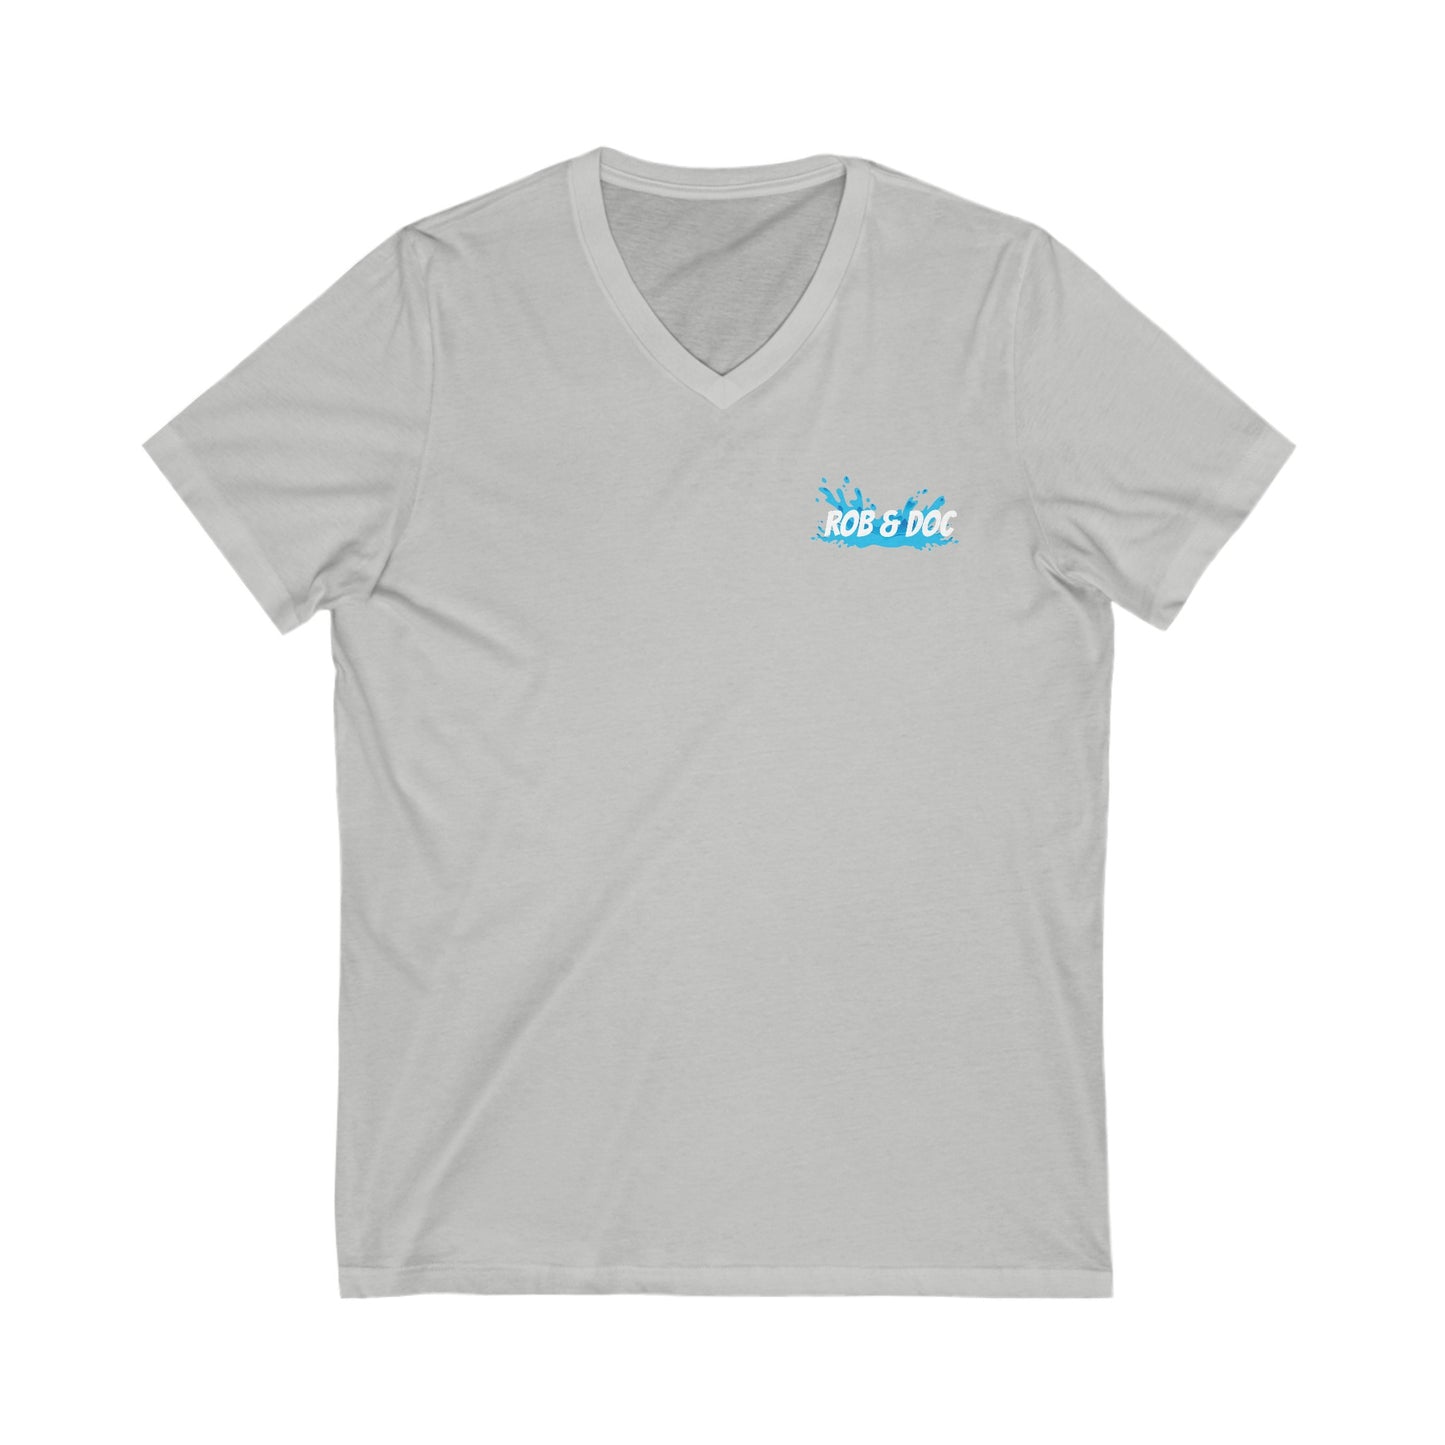 * Rob & Doc  TEAM MONTANA  Unisex Softstyle T-Shirt